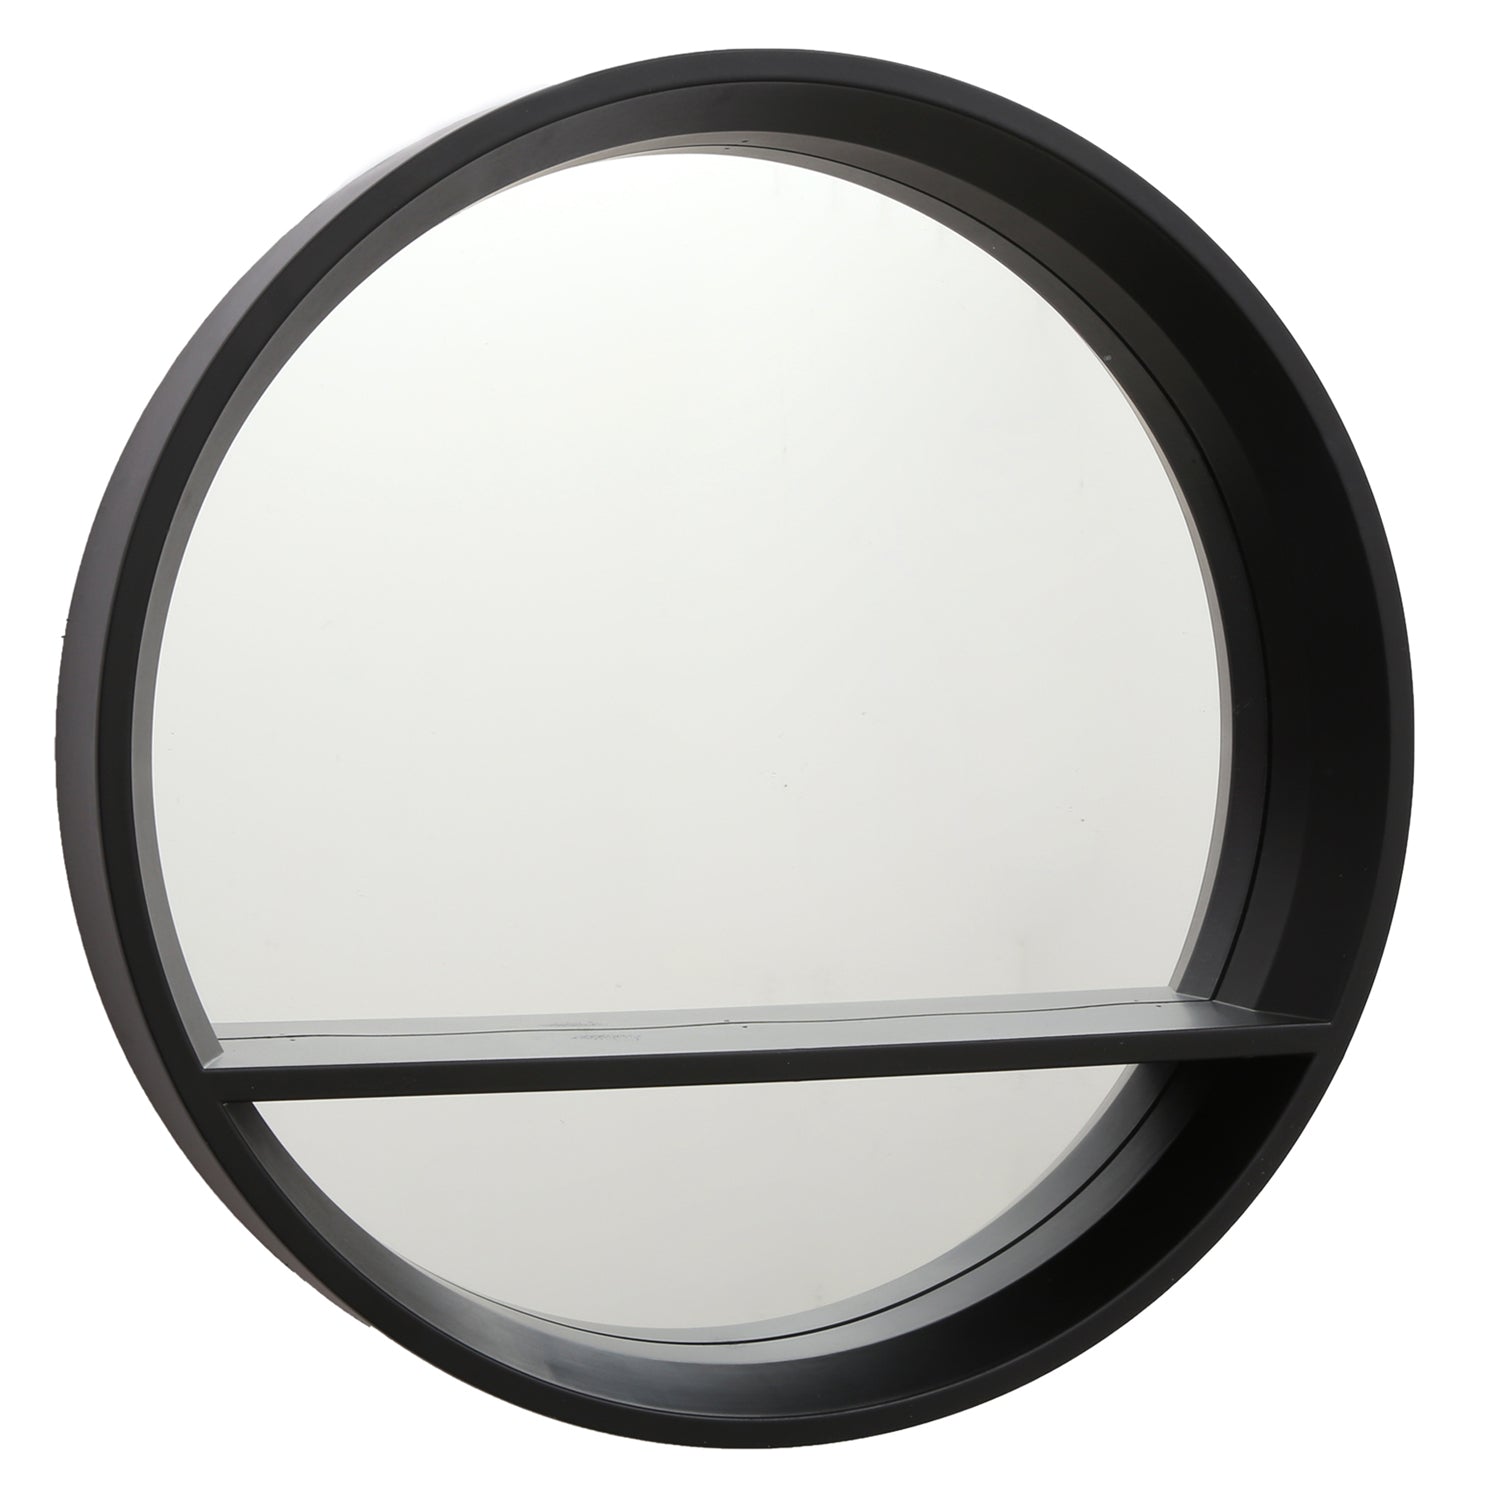 Round Porthole Bathroom Mirror with Shelf - Black